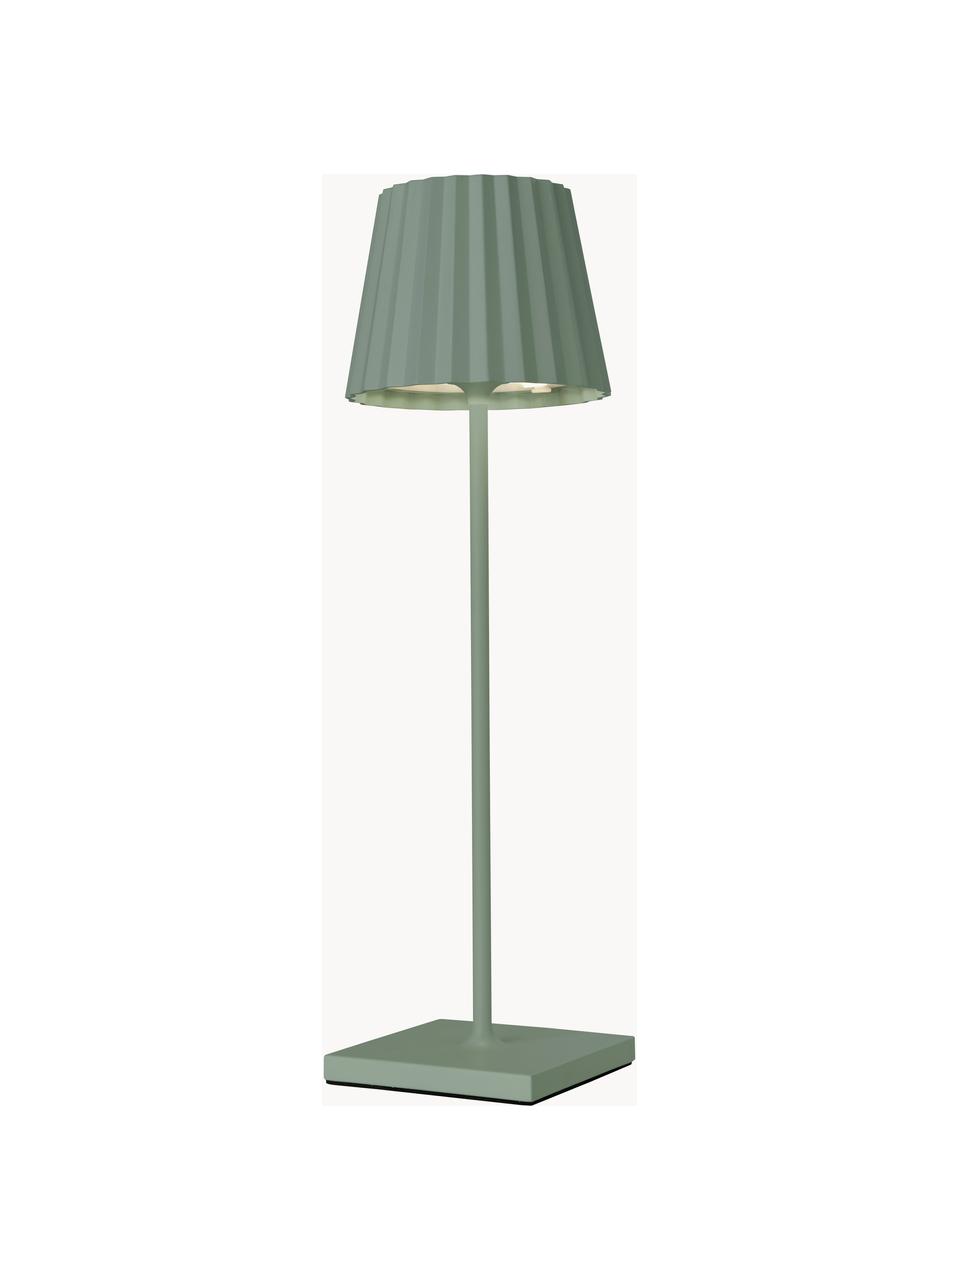 Lampada portatile da tavolo per esterni con luce regolabile Trellia, Paralume: alluminio verniciato, Verde salvia, Ø 12 x Alt. 38 cm